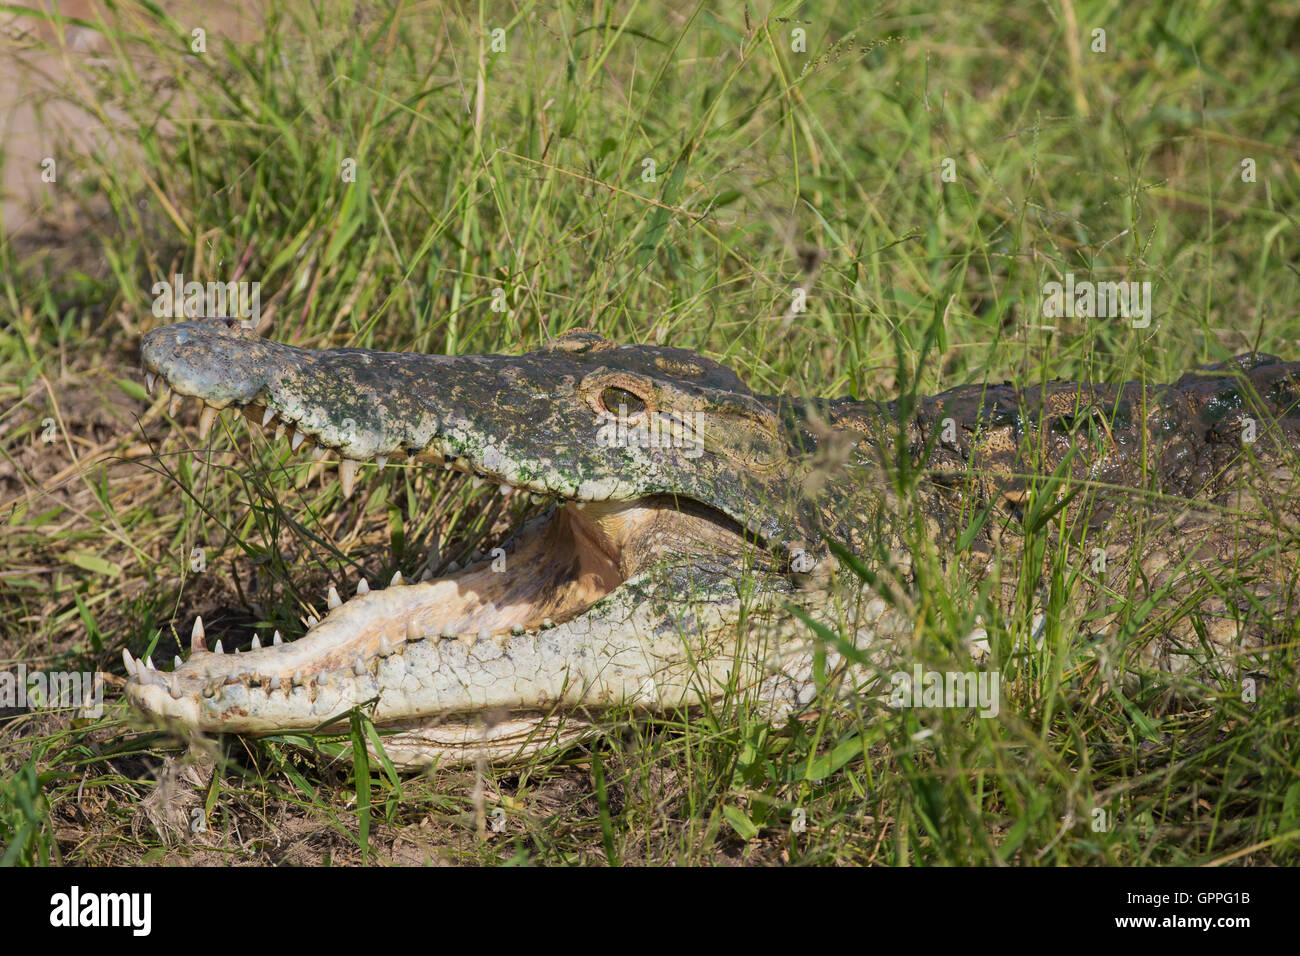 Retrato de cocodrilo del Nilo (Crocodylus niloticus) peregrino. Foto de stock